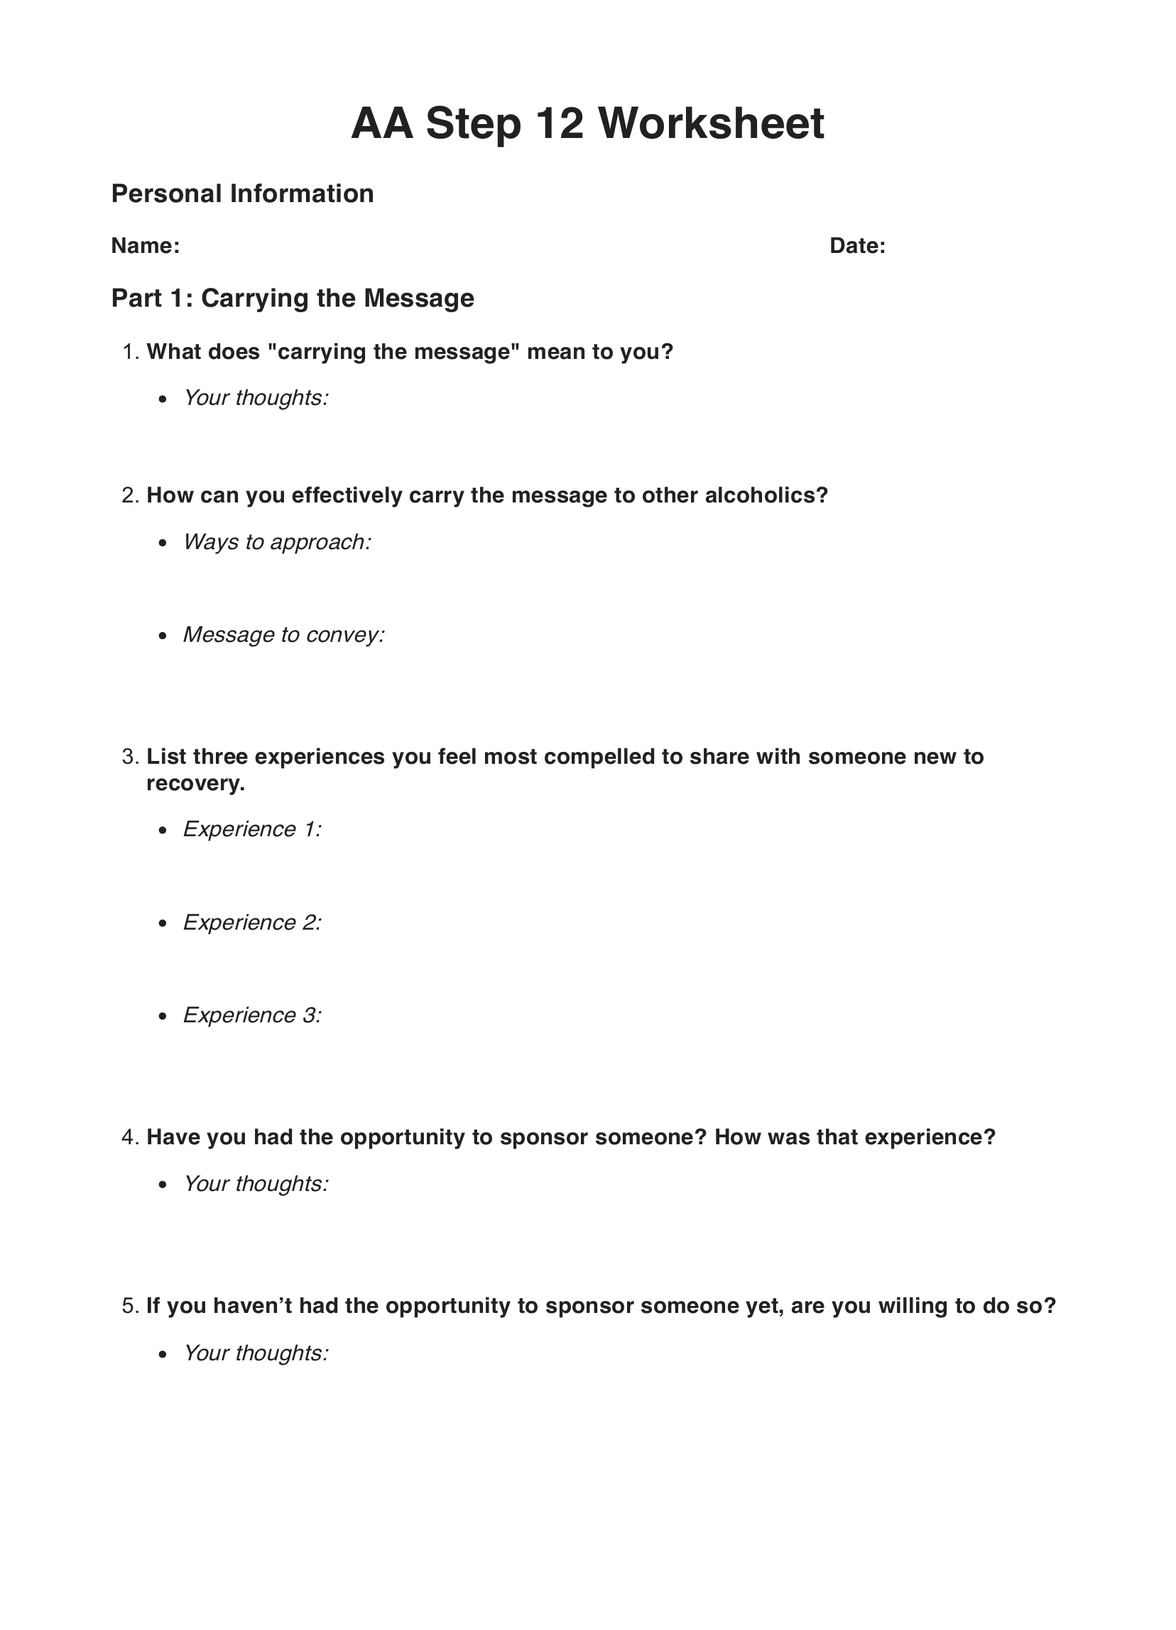 AA Step 12 Worksheets PDF Example